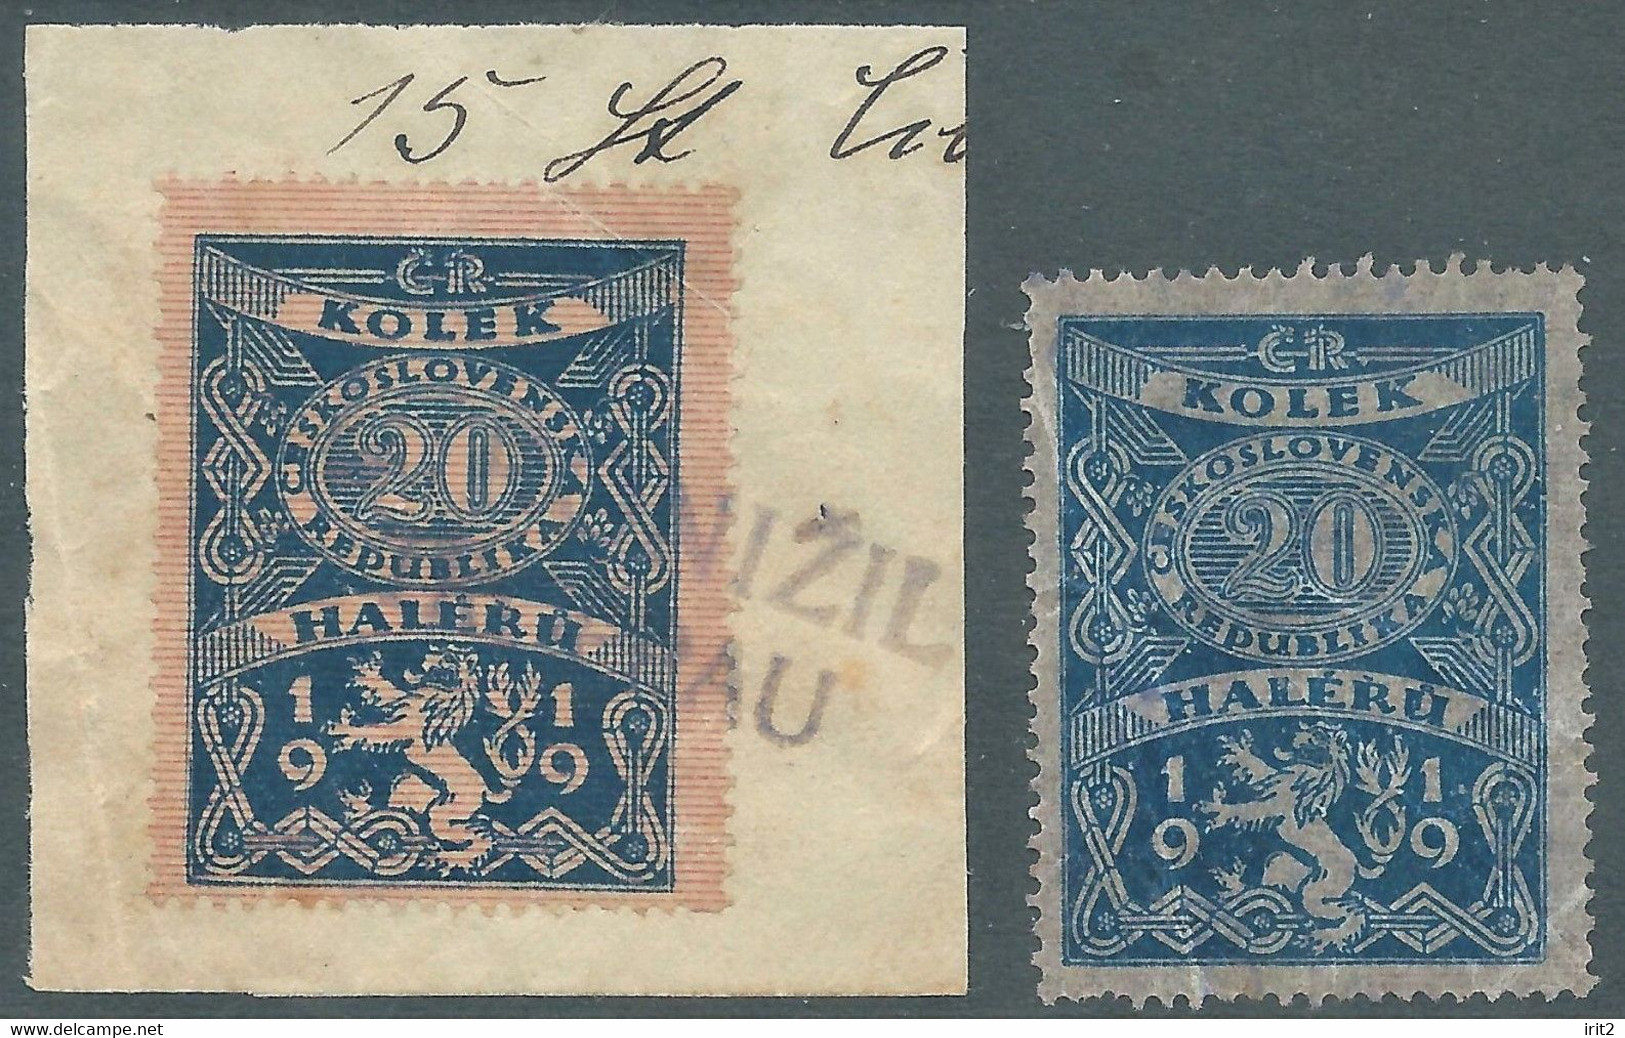 Czechoslovakia - CECOSLOVACCHIA.1919 Revenue Stamps Tax Fiscal,Kolek 20 Haleru,Used - Francobolli Di Servizio